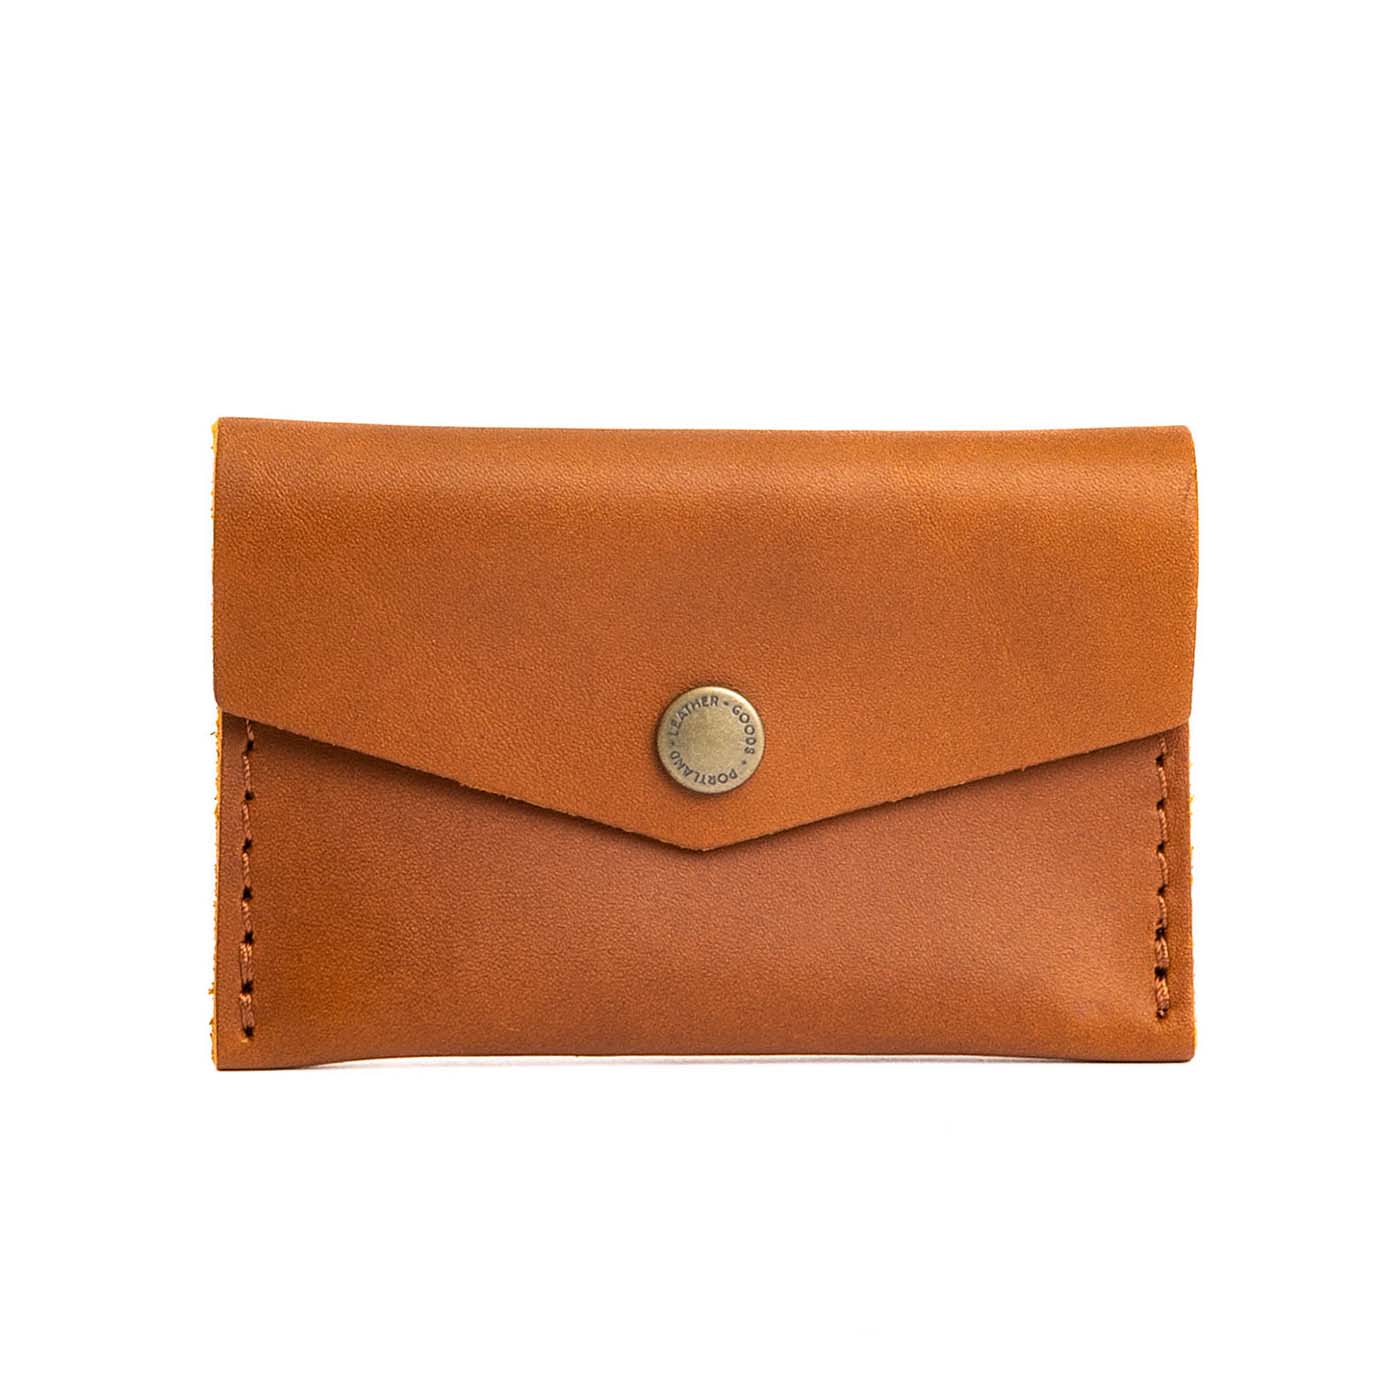 All Color: Honey | leather handmade envelope card wallet